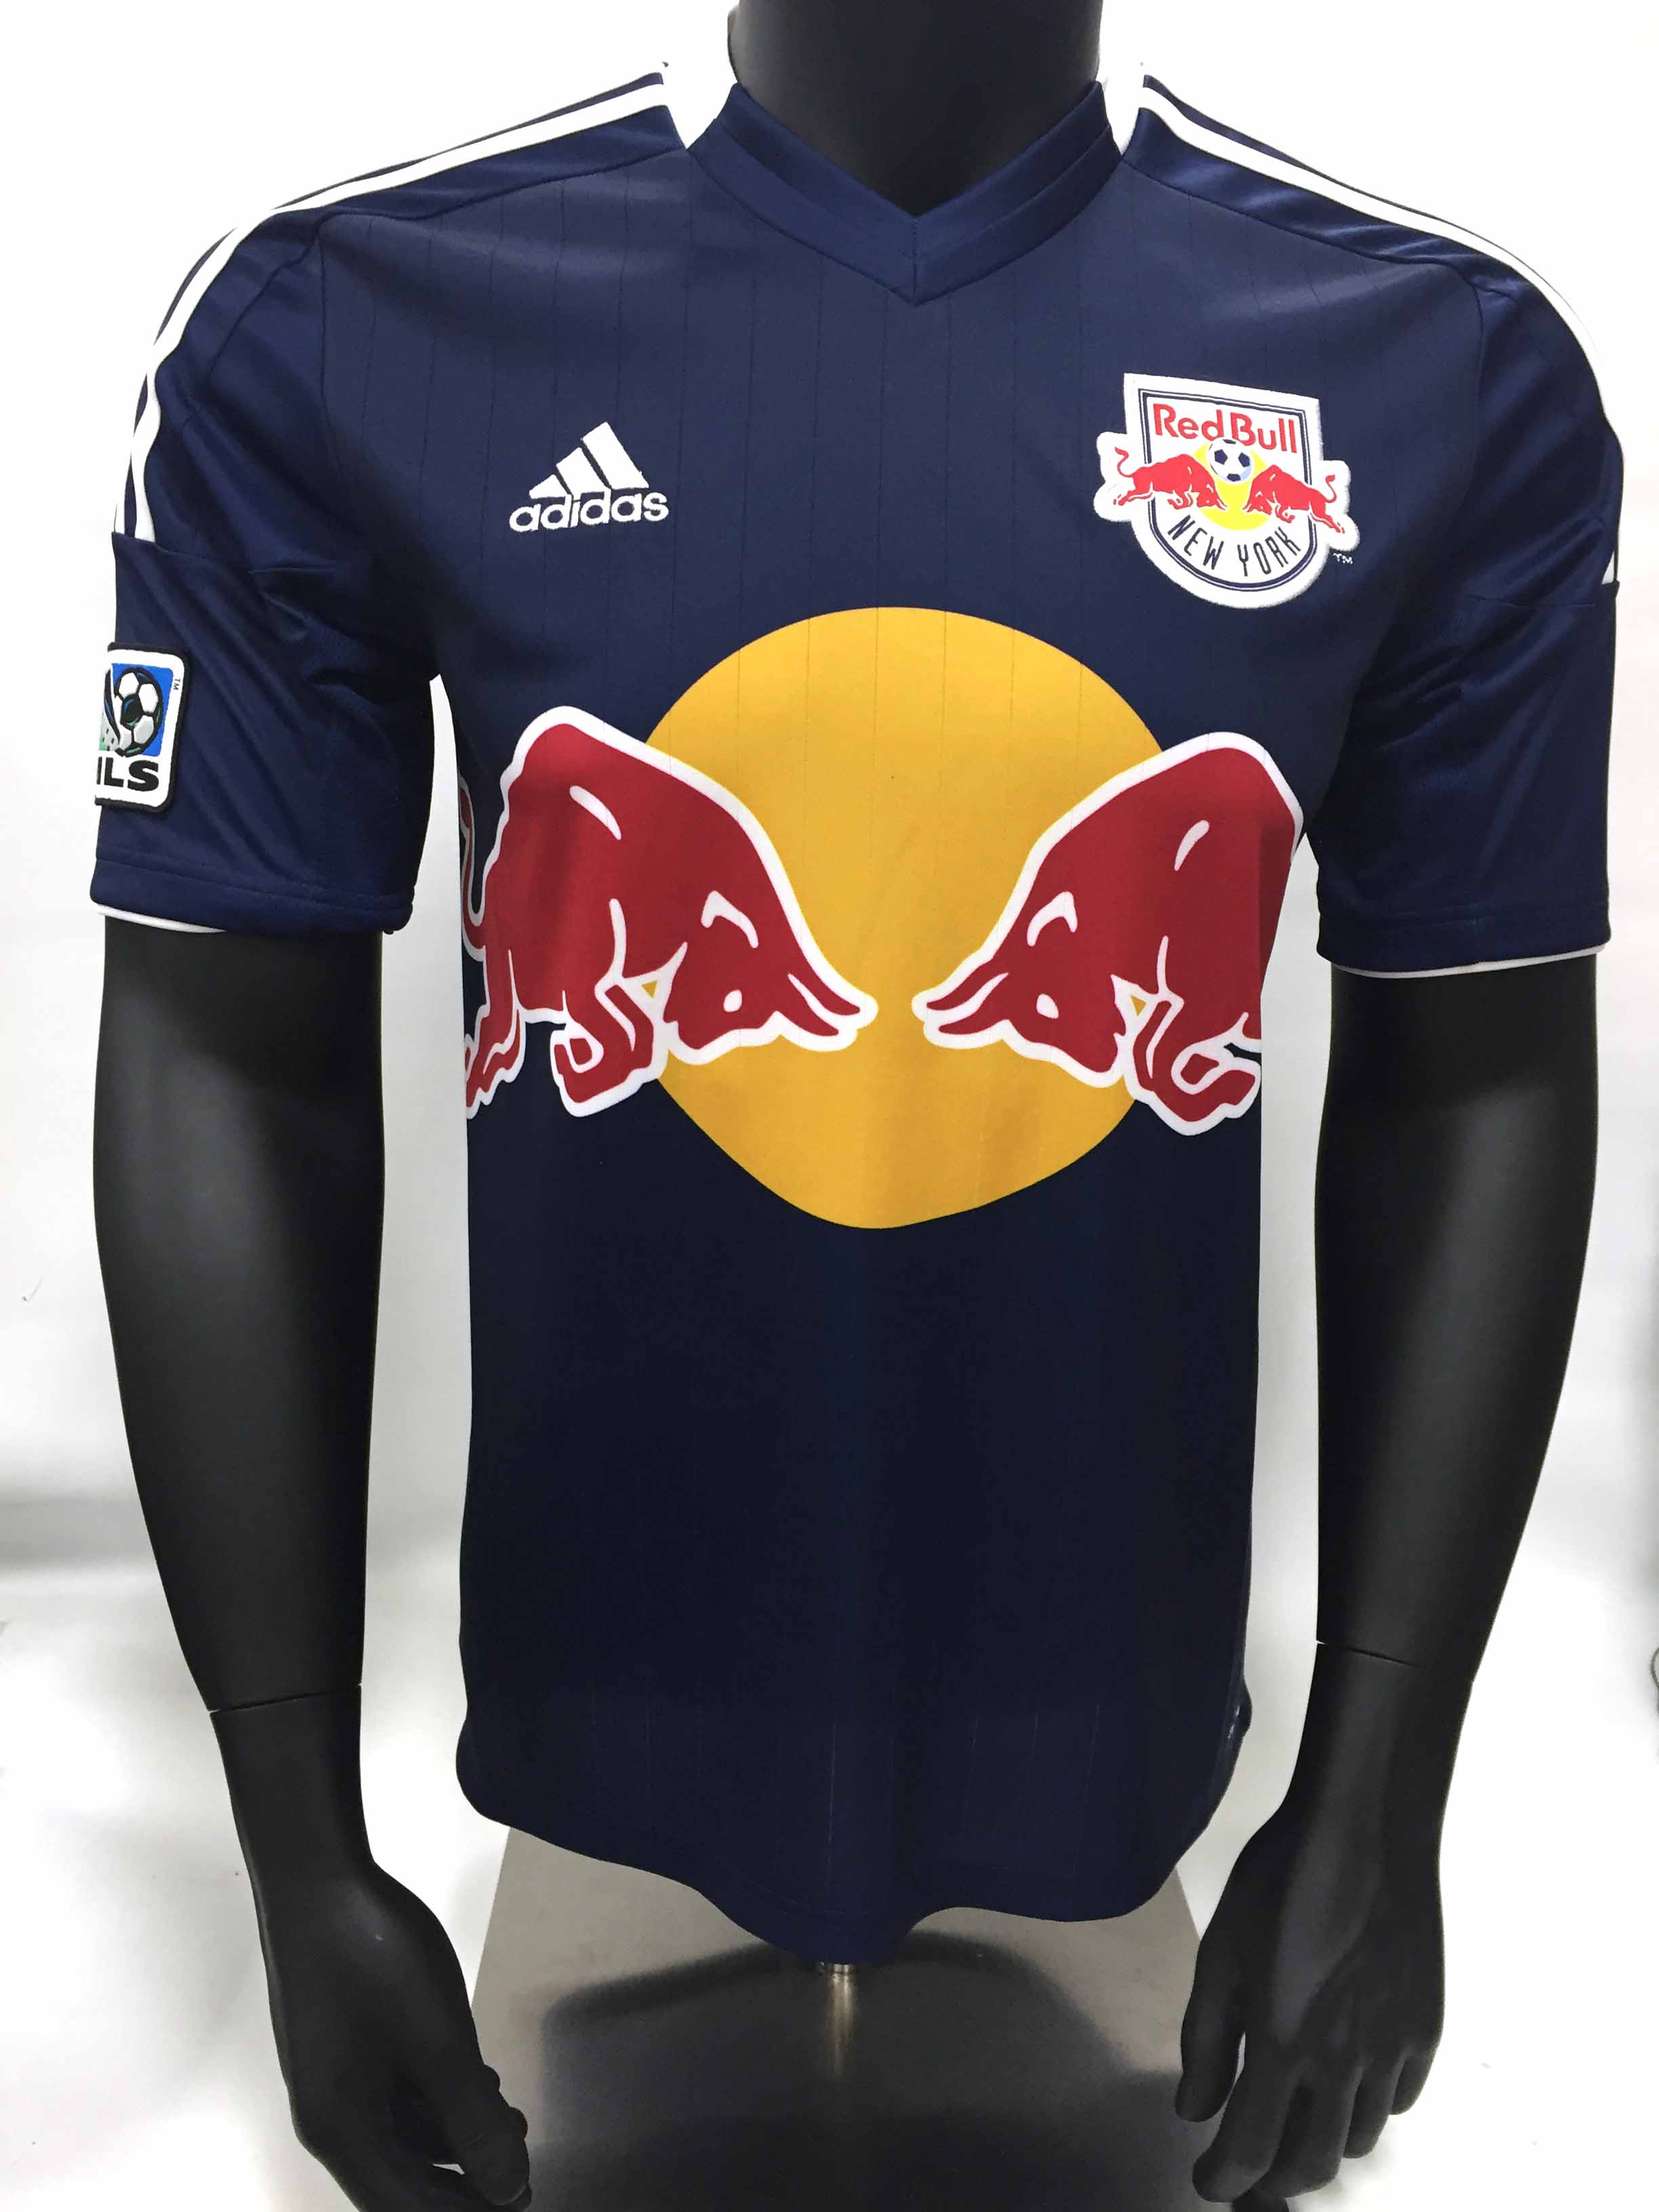 adidas Red Bull New York Jersey Soccer Premier